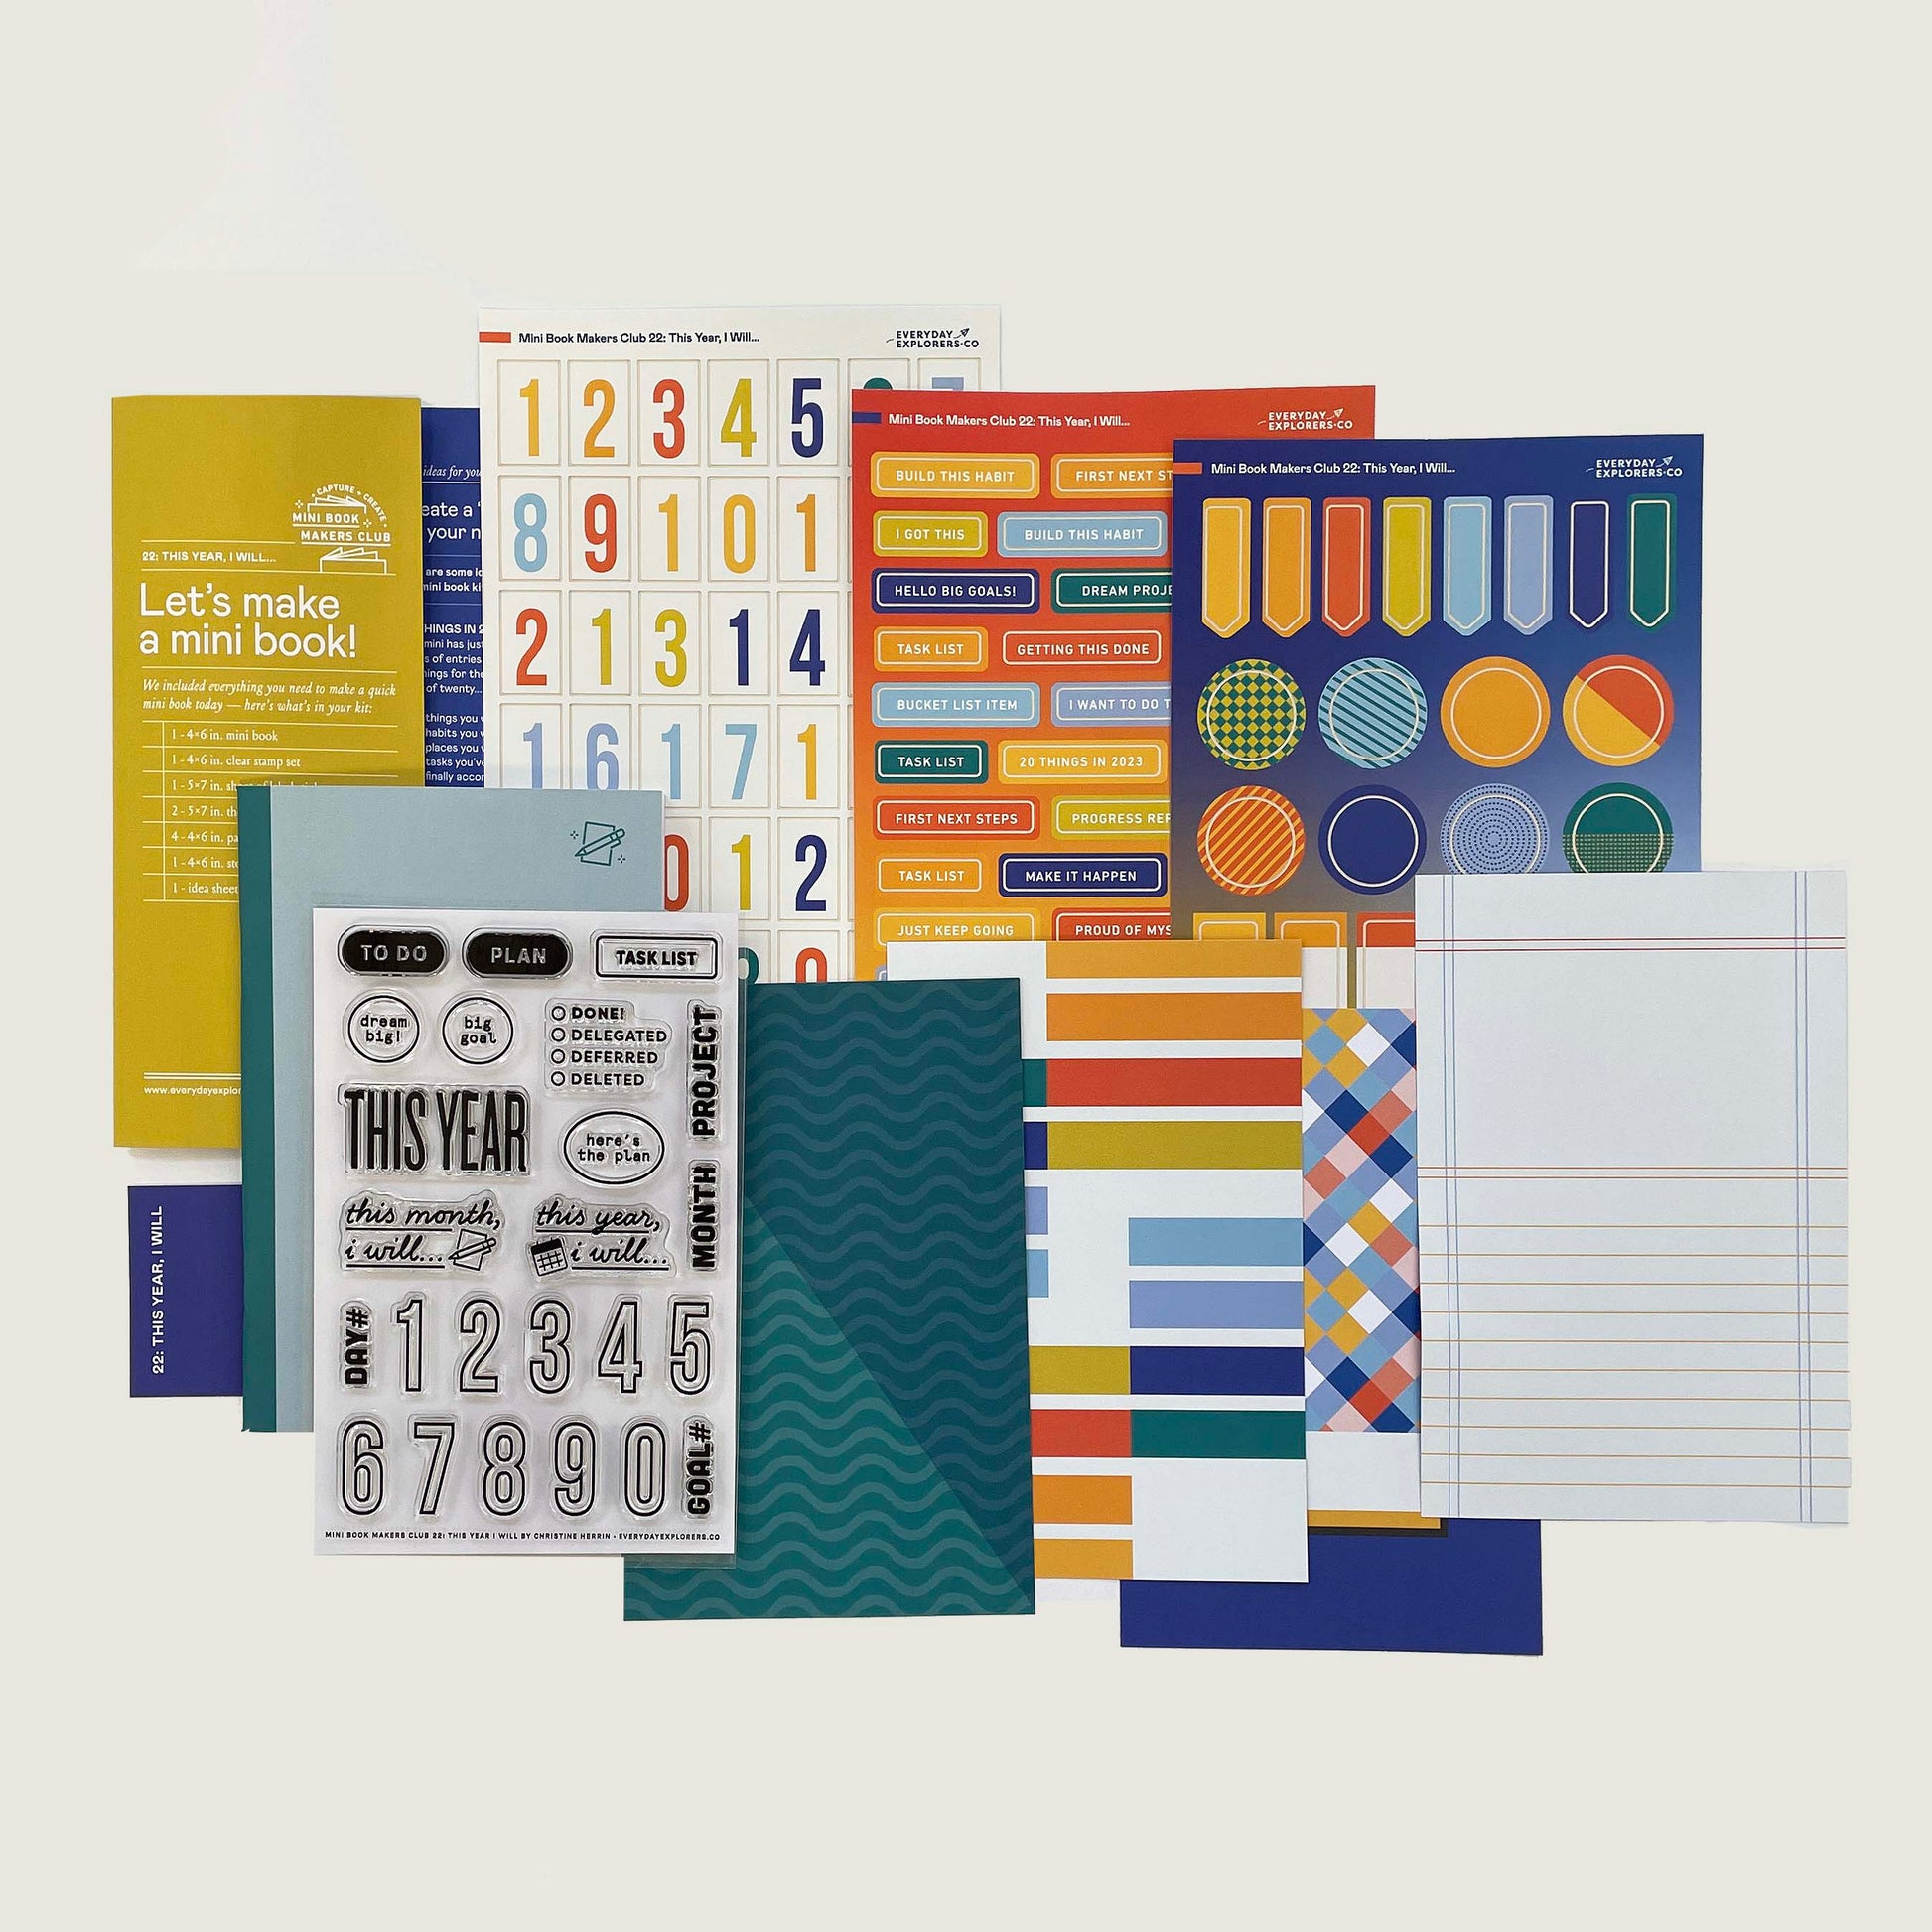 Book Club - Digital Stamp Set – Everyday Explorers Co.